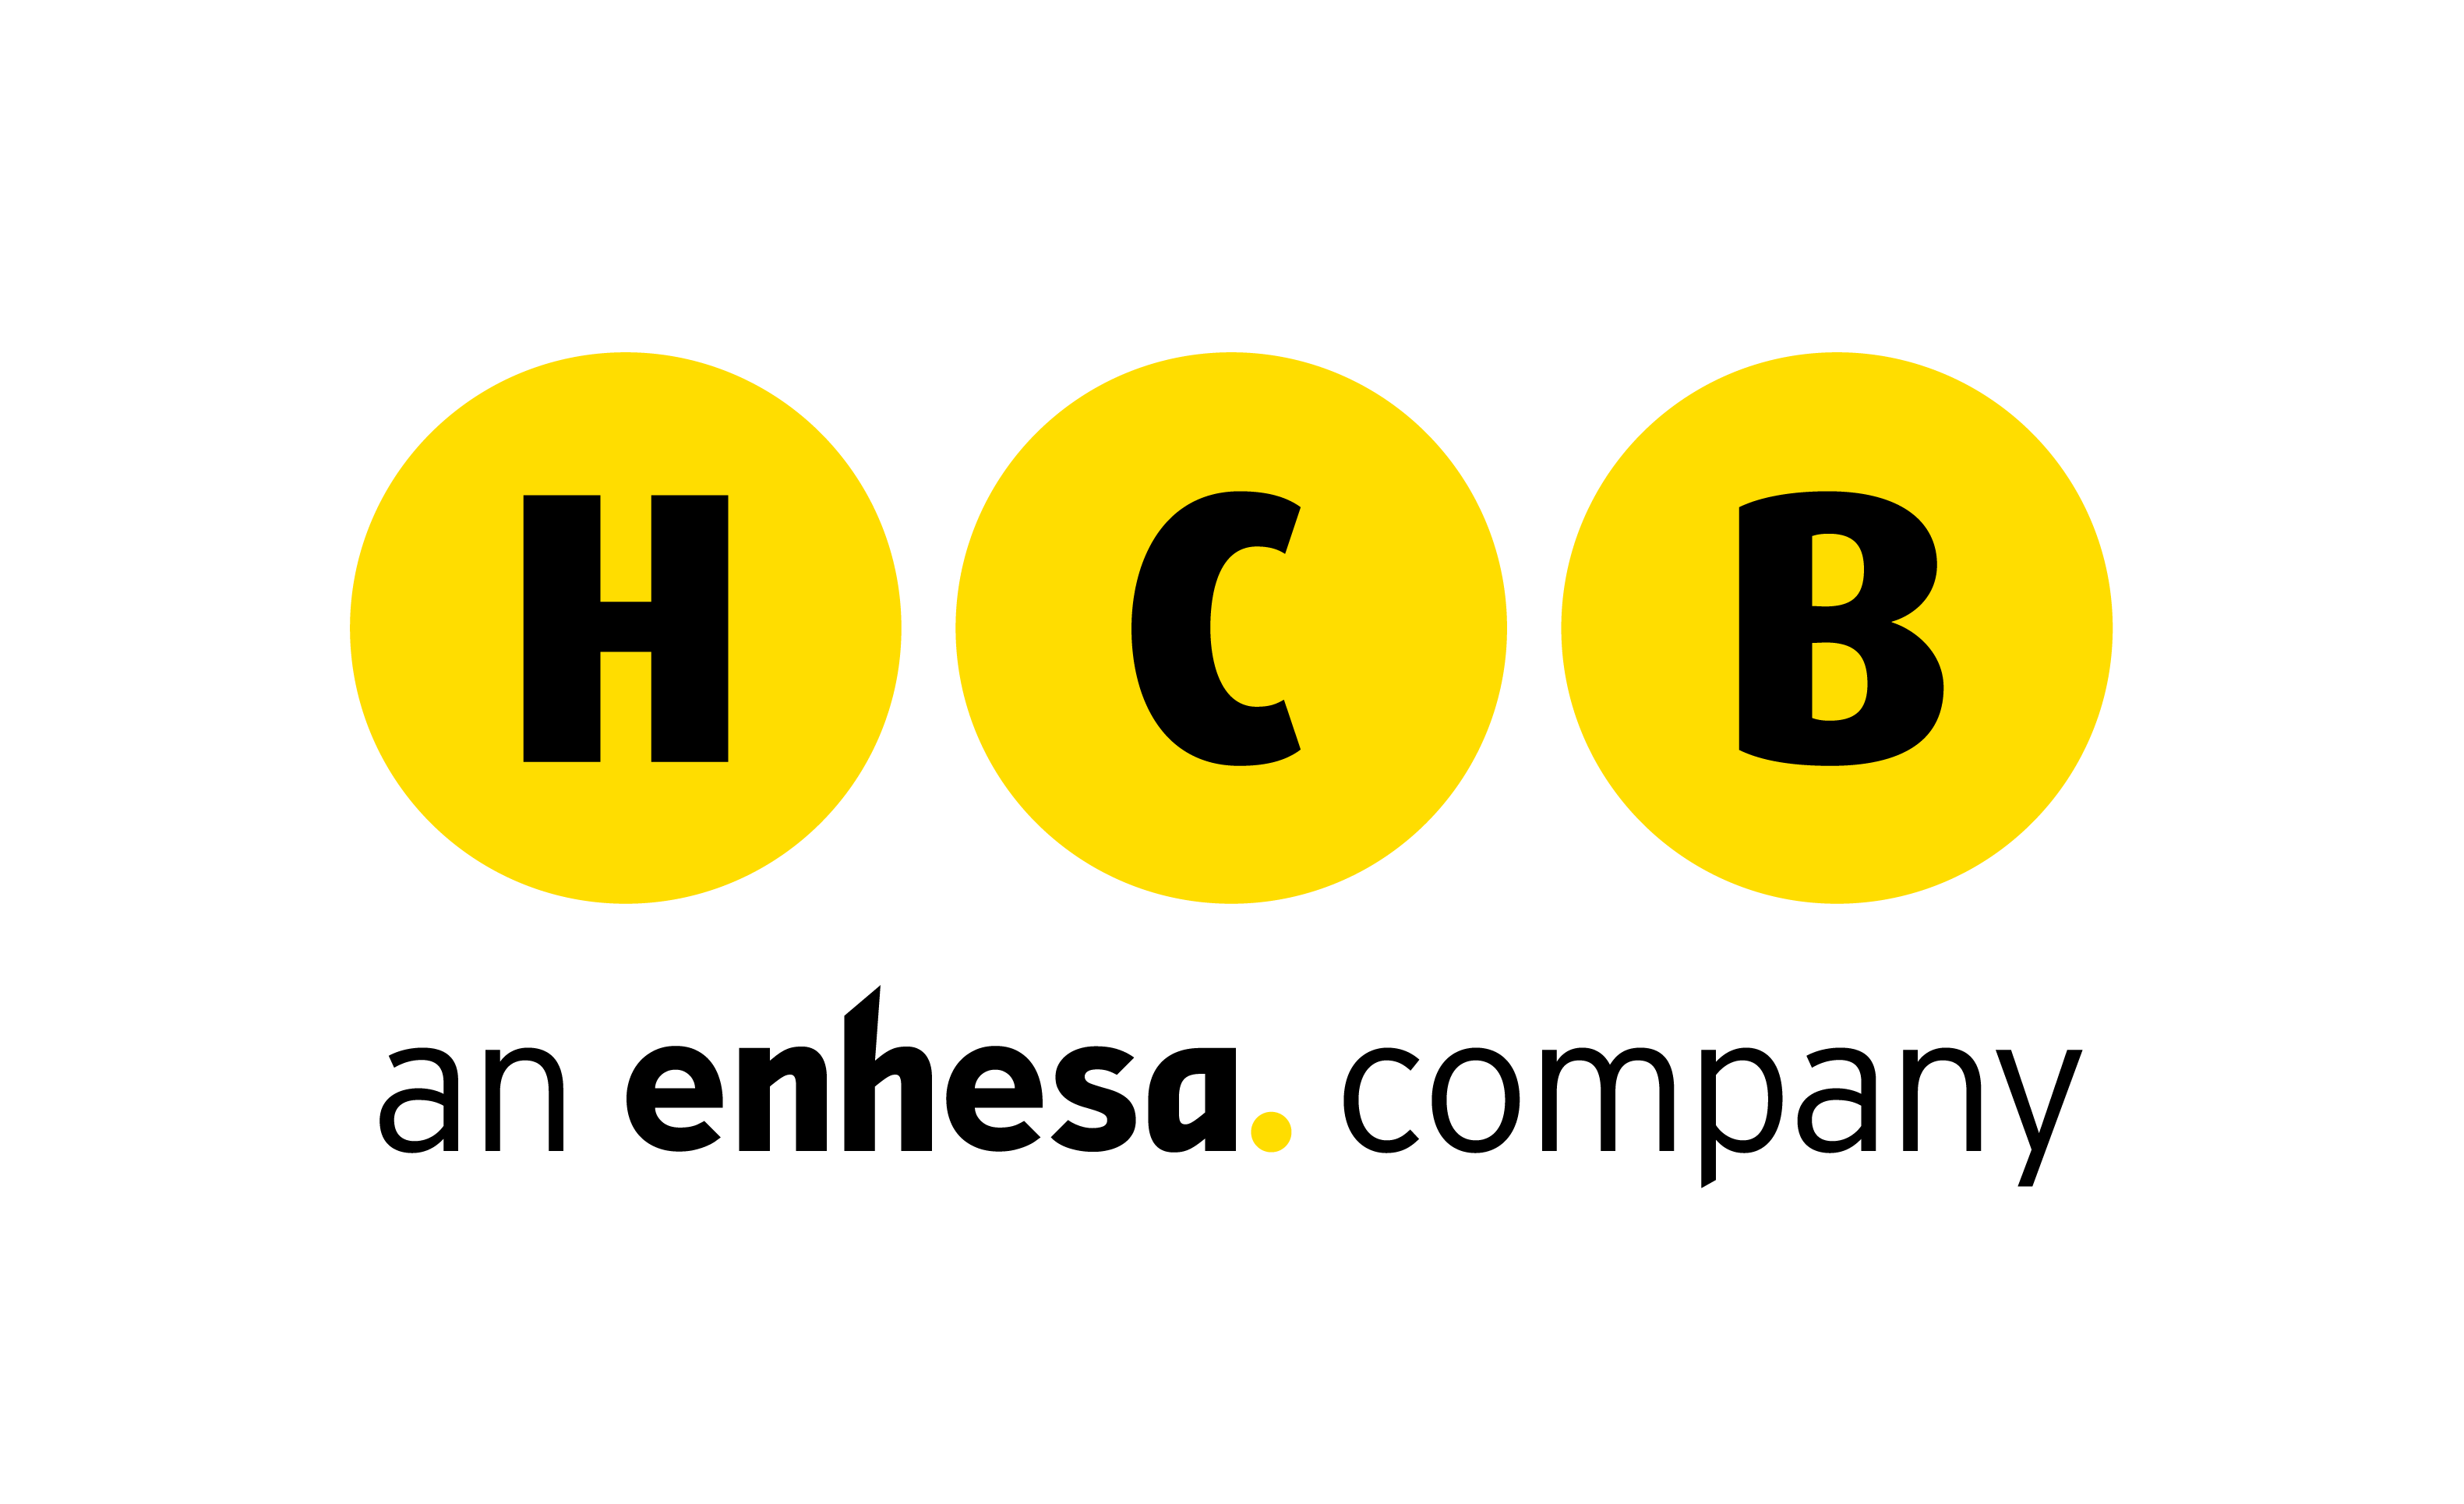 Uploaded Image: /uploads/Forum/HCB Logo 2015.jpg